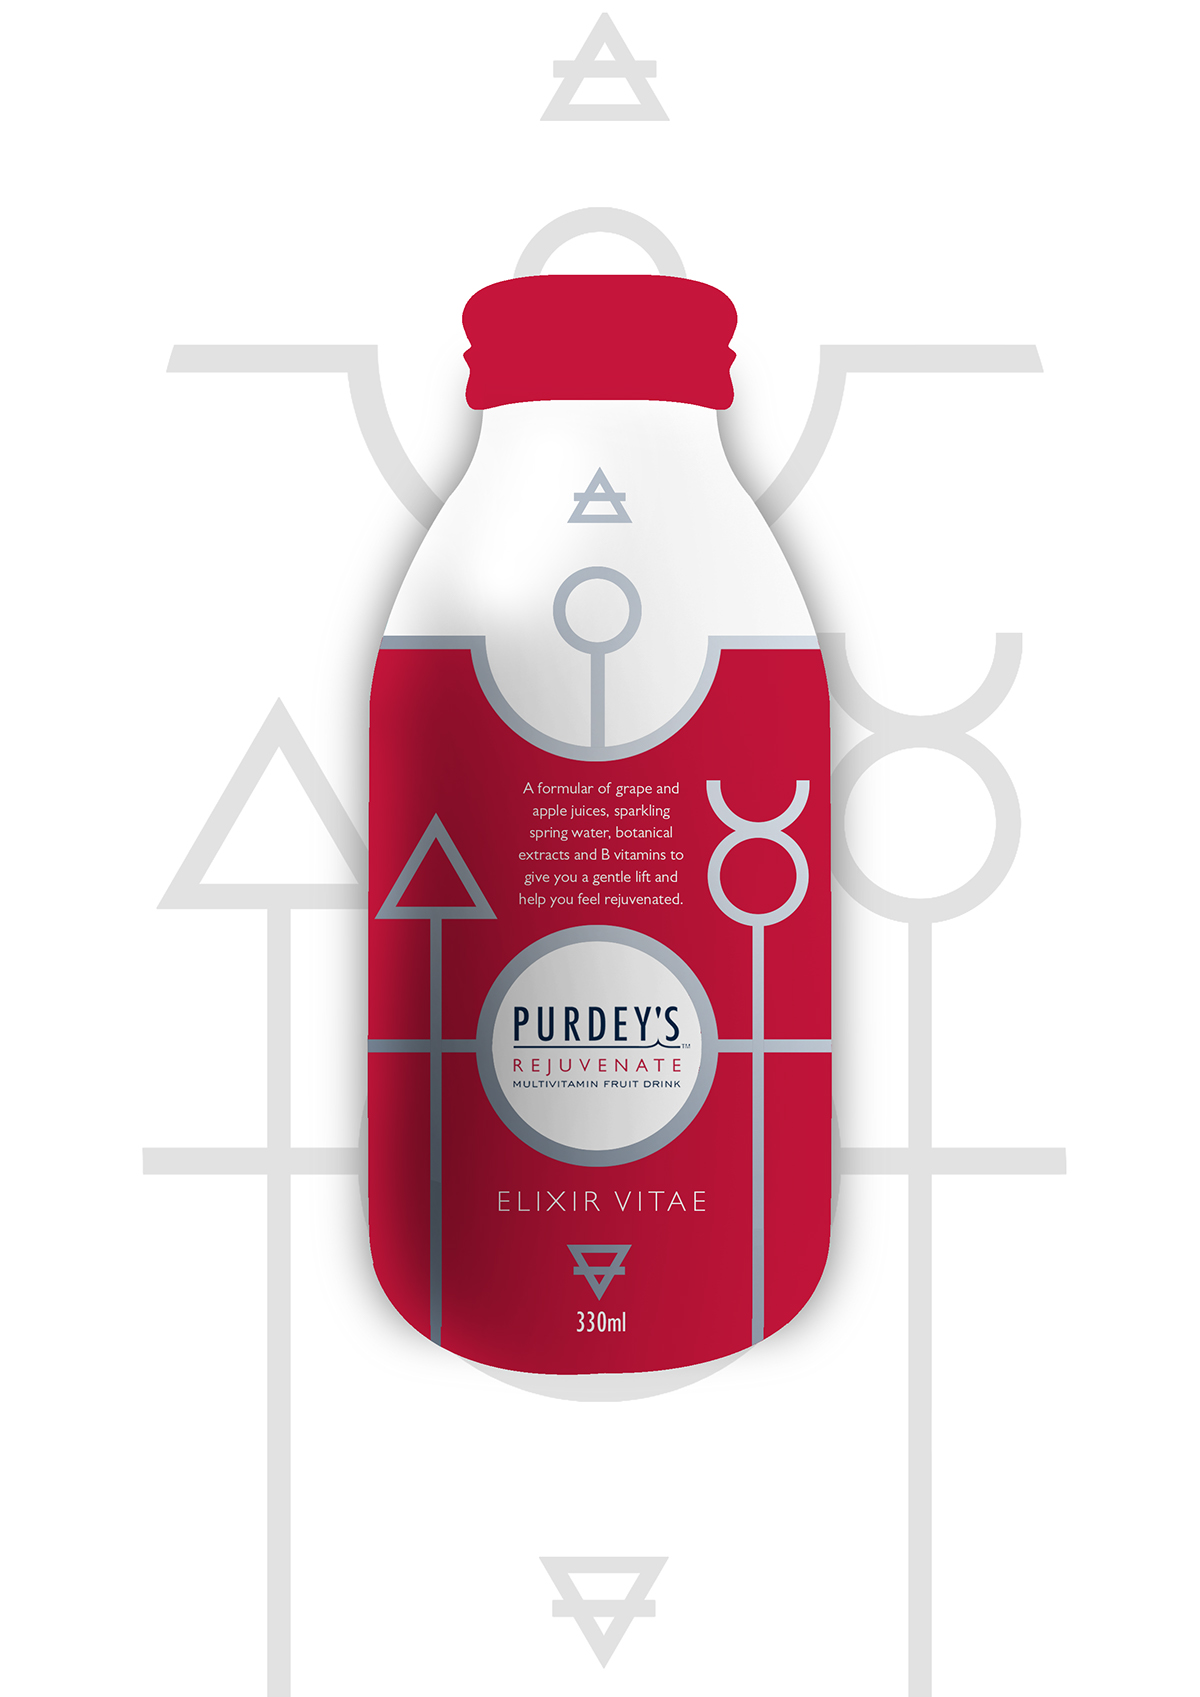 Adobe Portfolio Purdey's Rejuvenate drink bottle tshirt D&AD Competition Rebrand advert marketing   design alchemy occult symbols formula